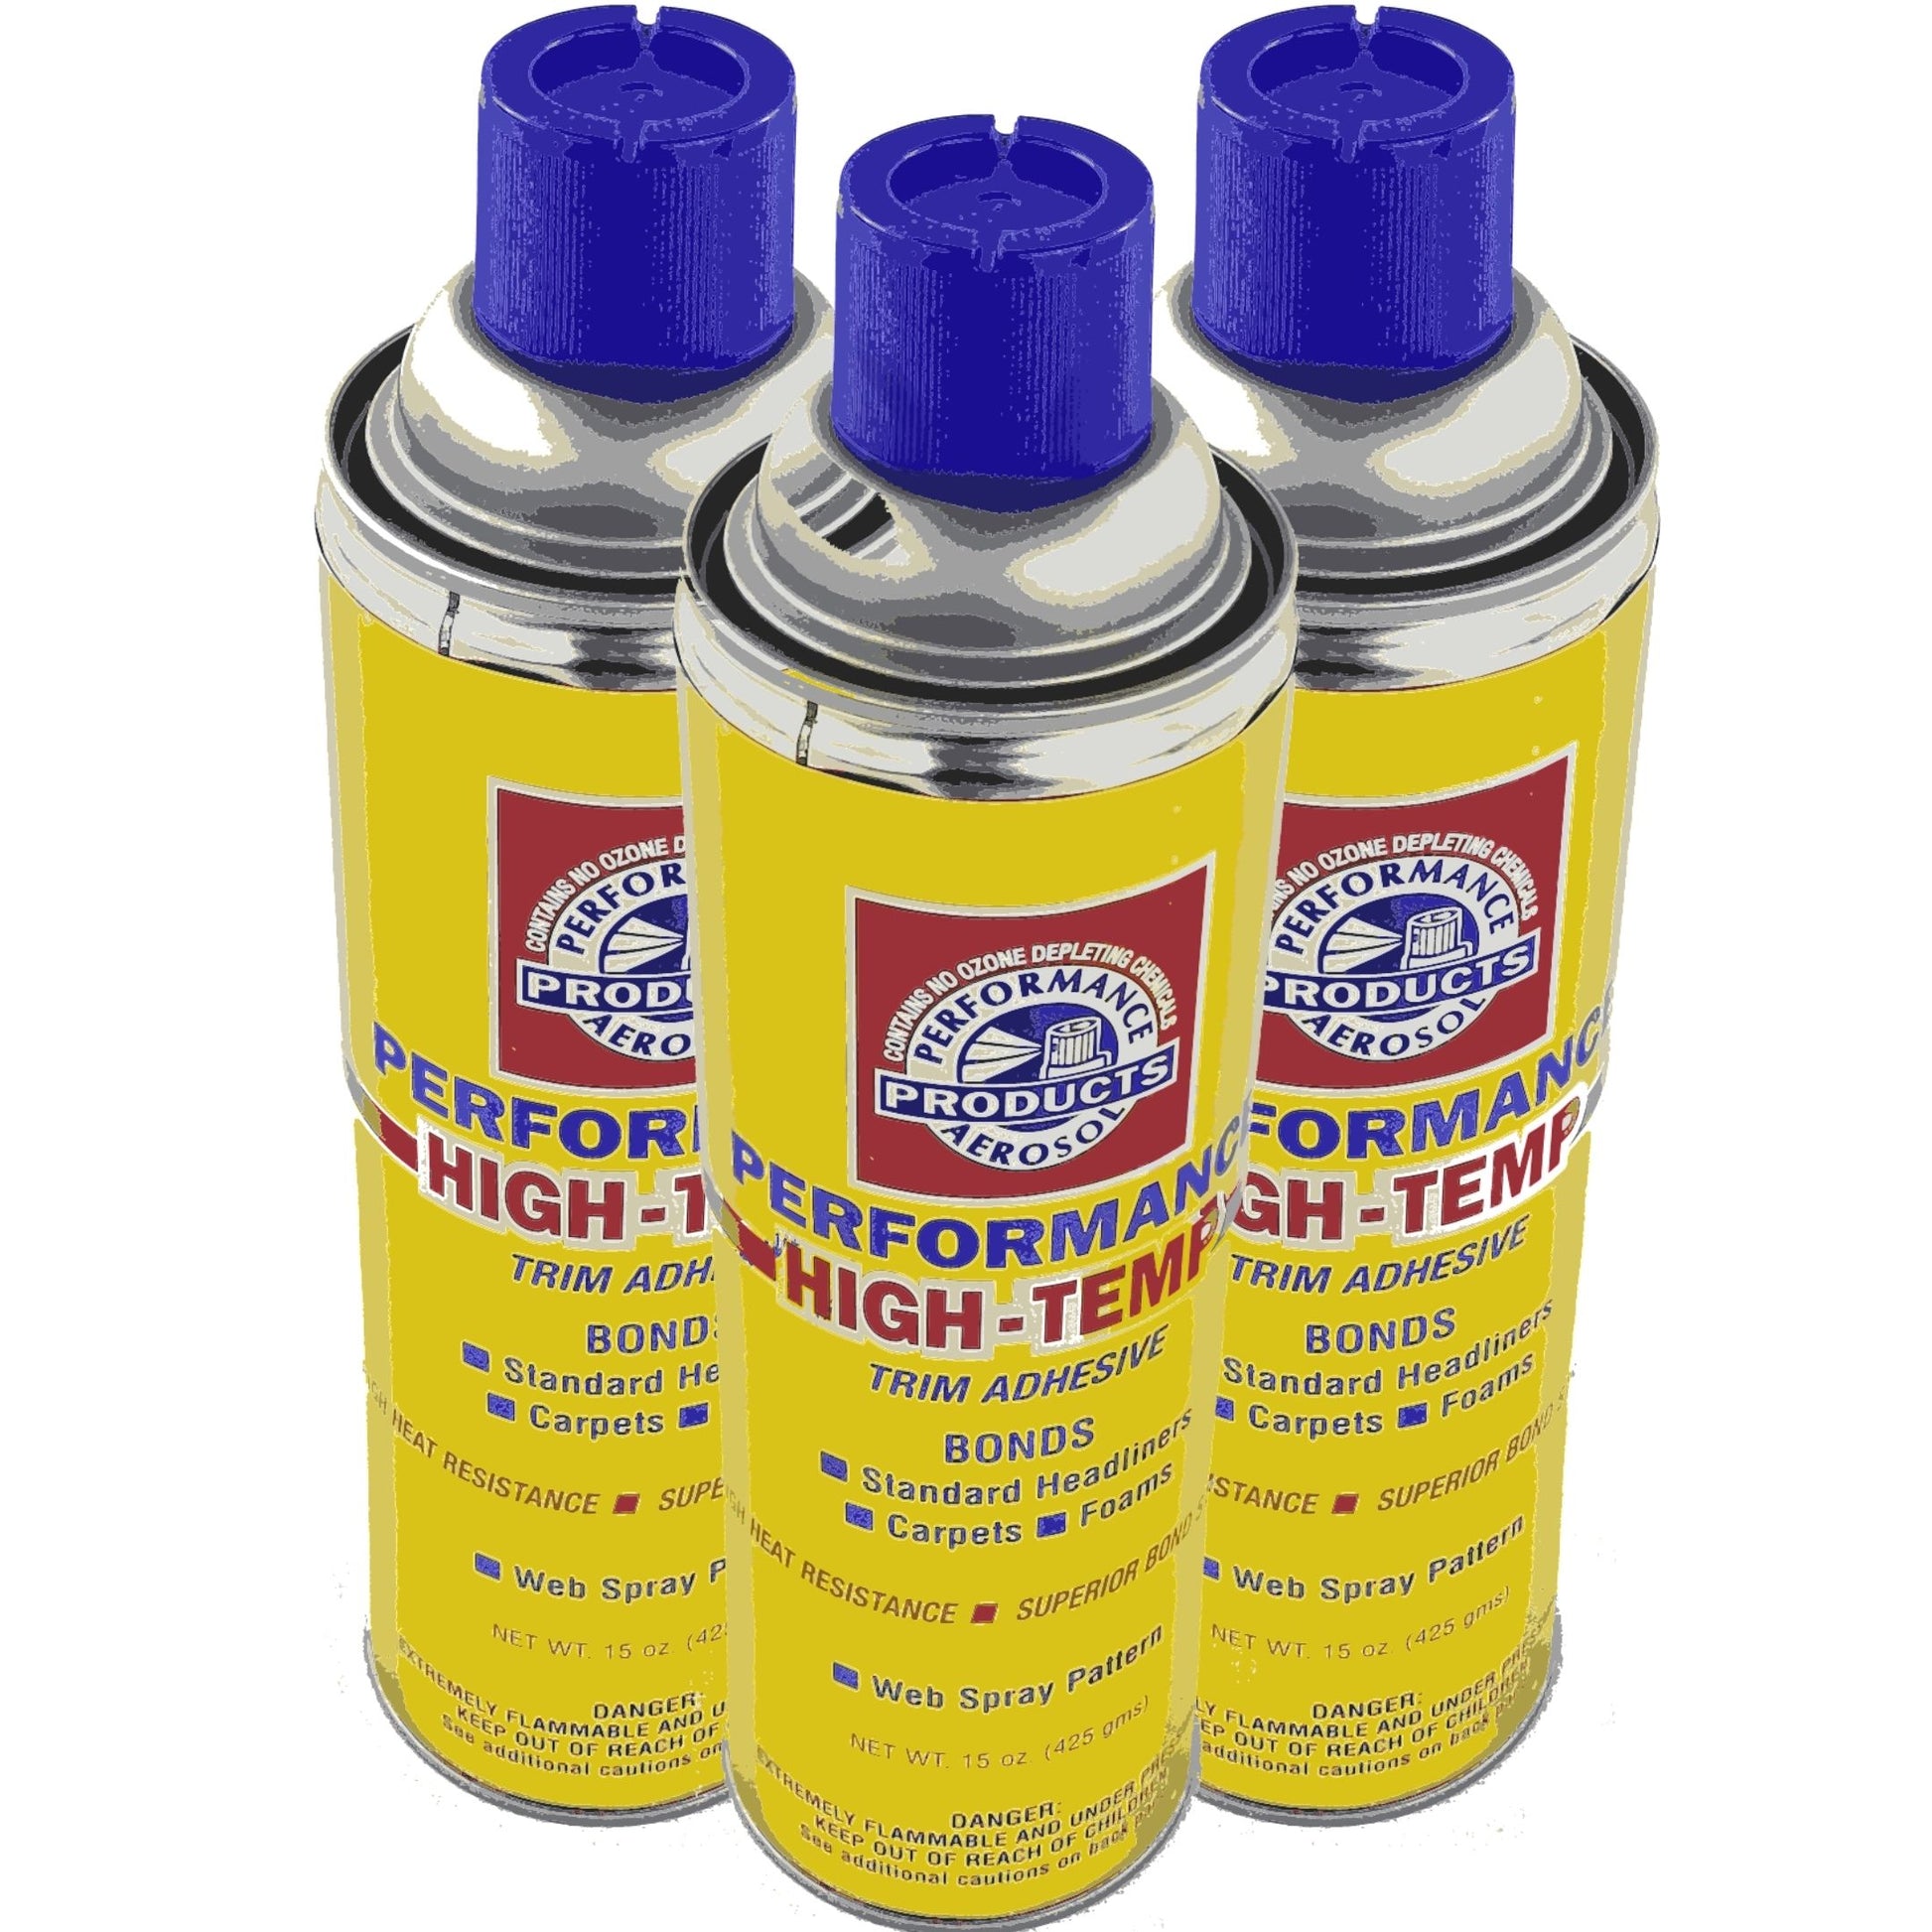 Headliner Adhesive Spray Glue Hi-temp for Many Purposes 1 Can of